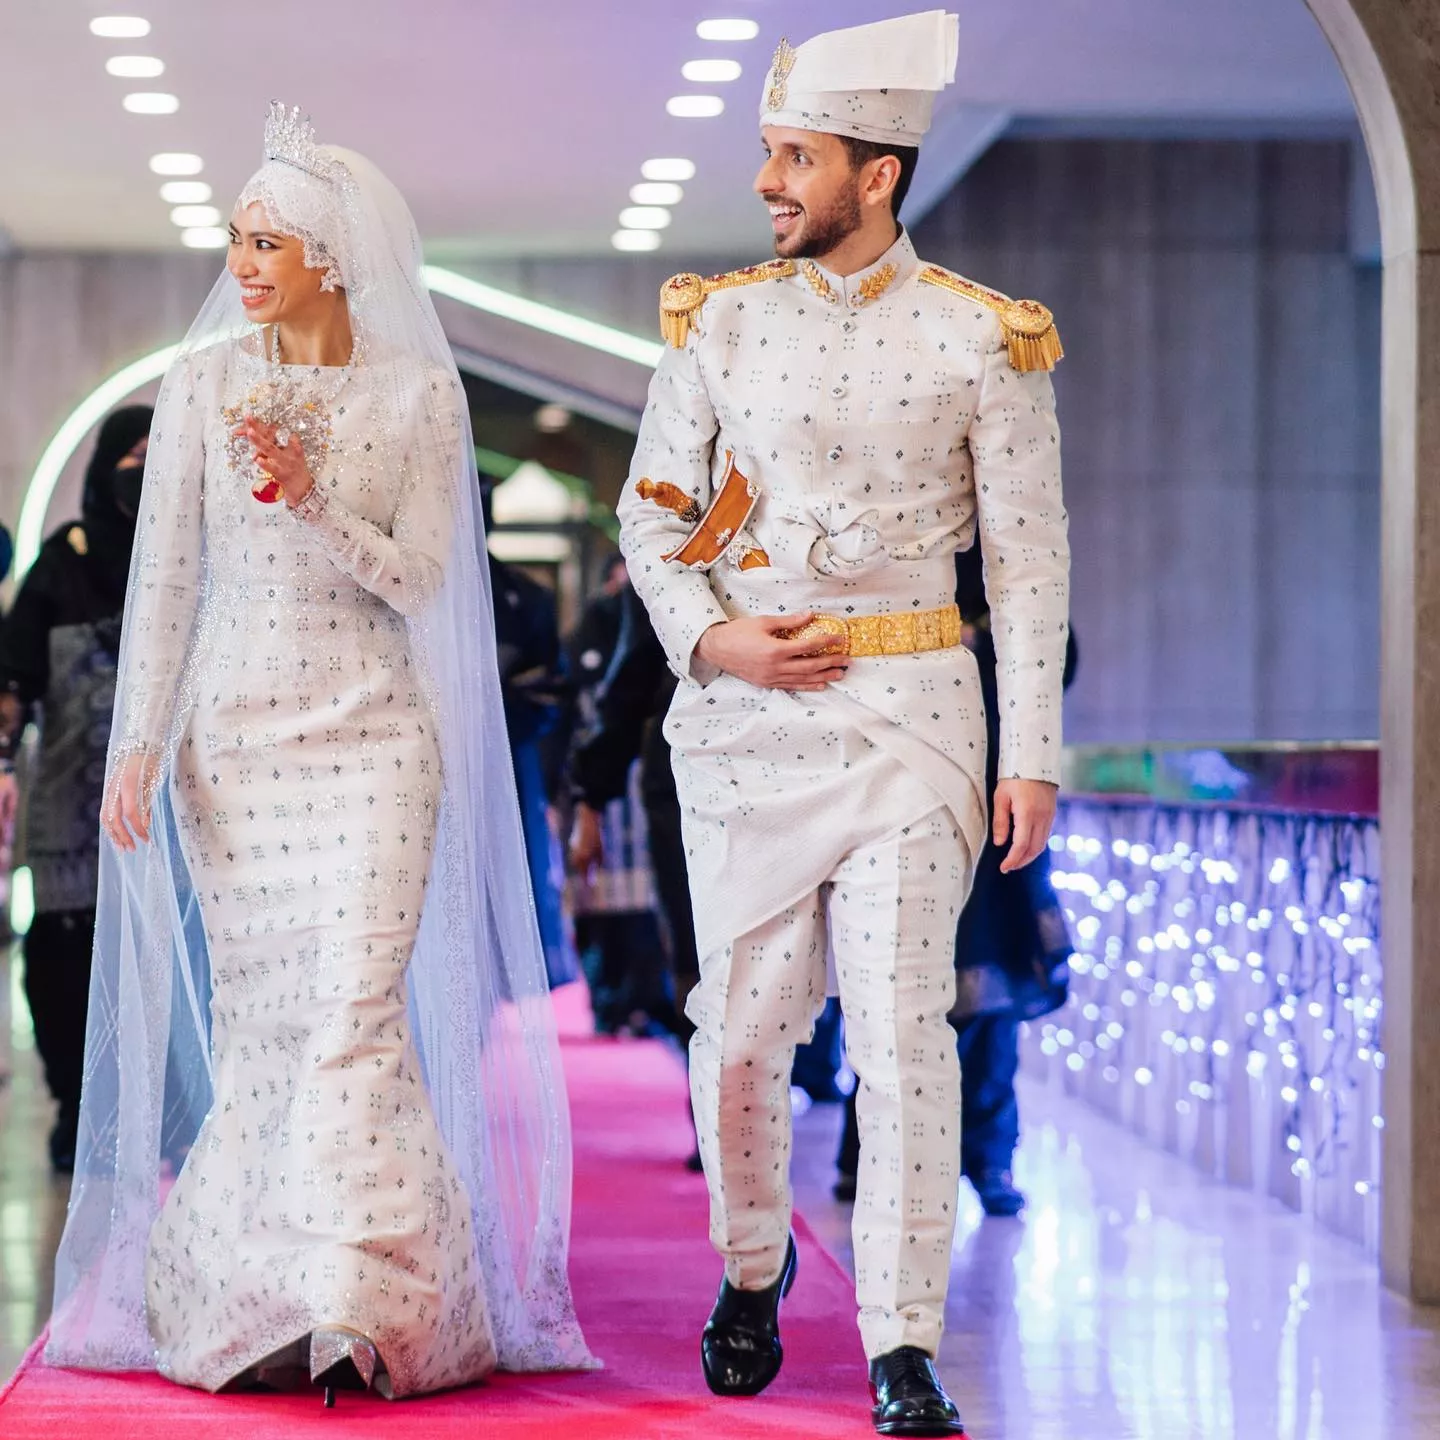 Plus size для шейха свадьбы не будет. Свадьба принцессы Брунея. Свадьба принцессы Брунея Хафизы. Фадзила принцесса Брунея. Принцесса Фадзилла свадьба.